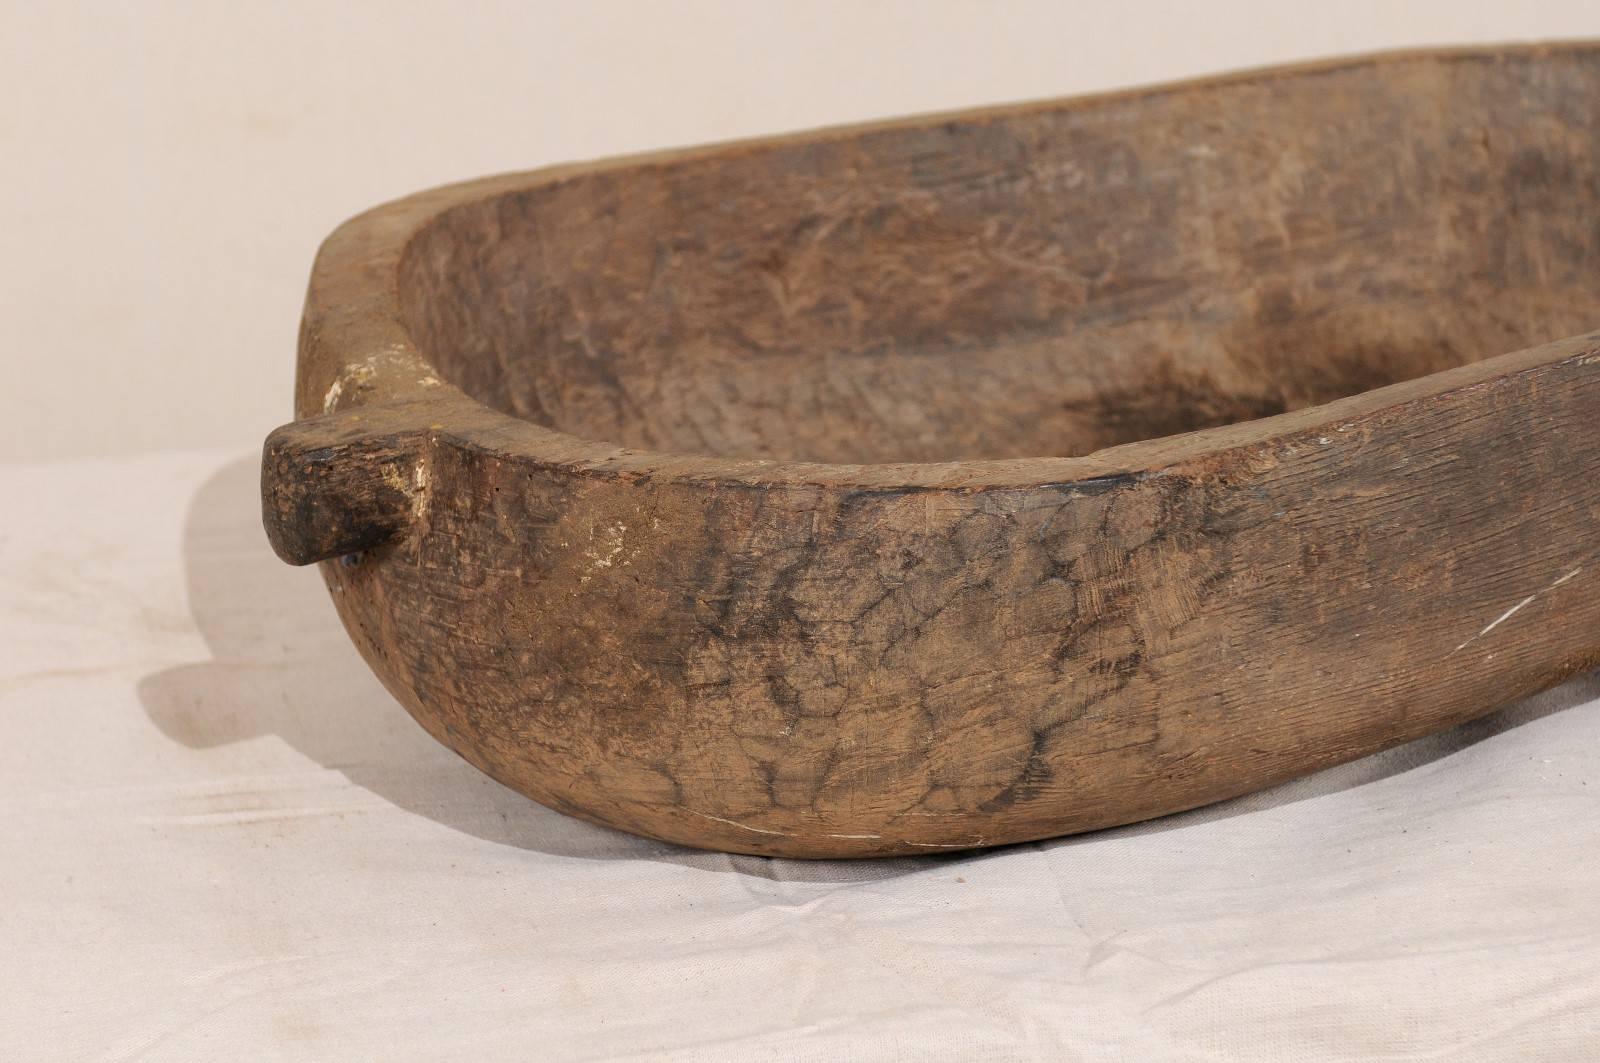 Burmese Vintage Naga Carved Rustic Wood Bowl from the North East India / Burma Region